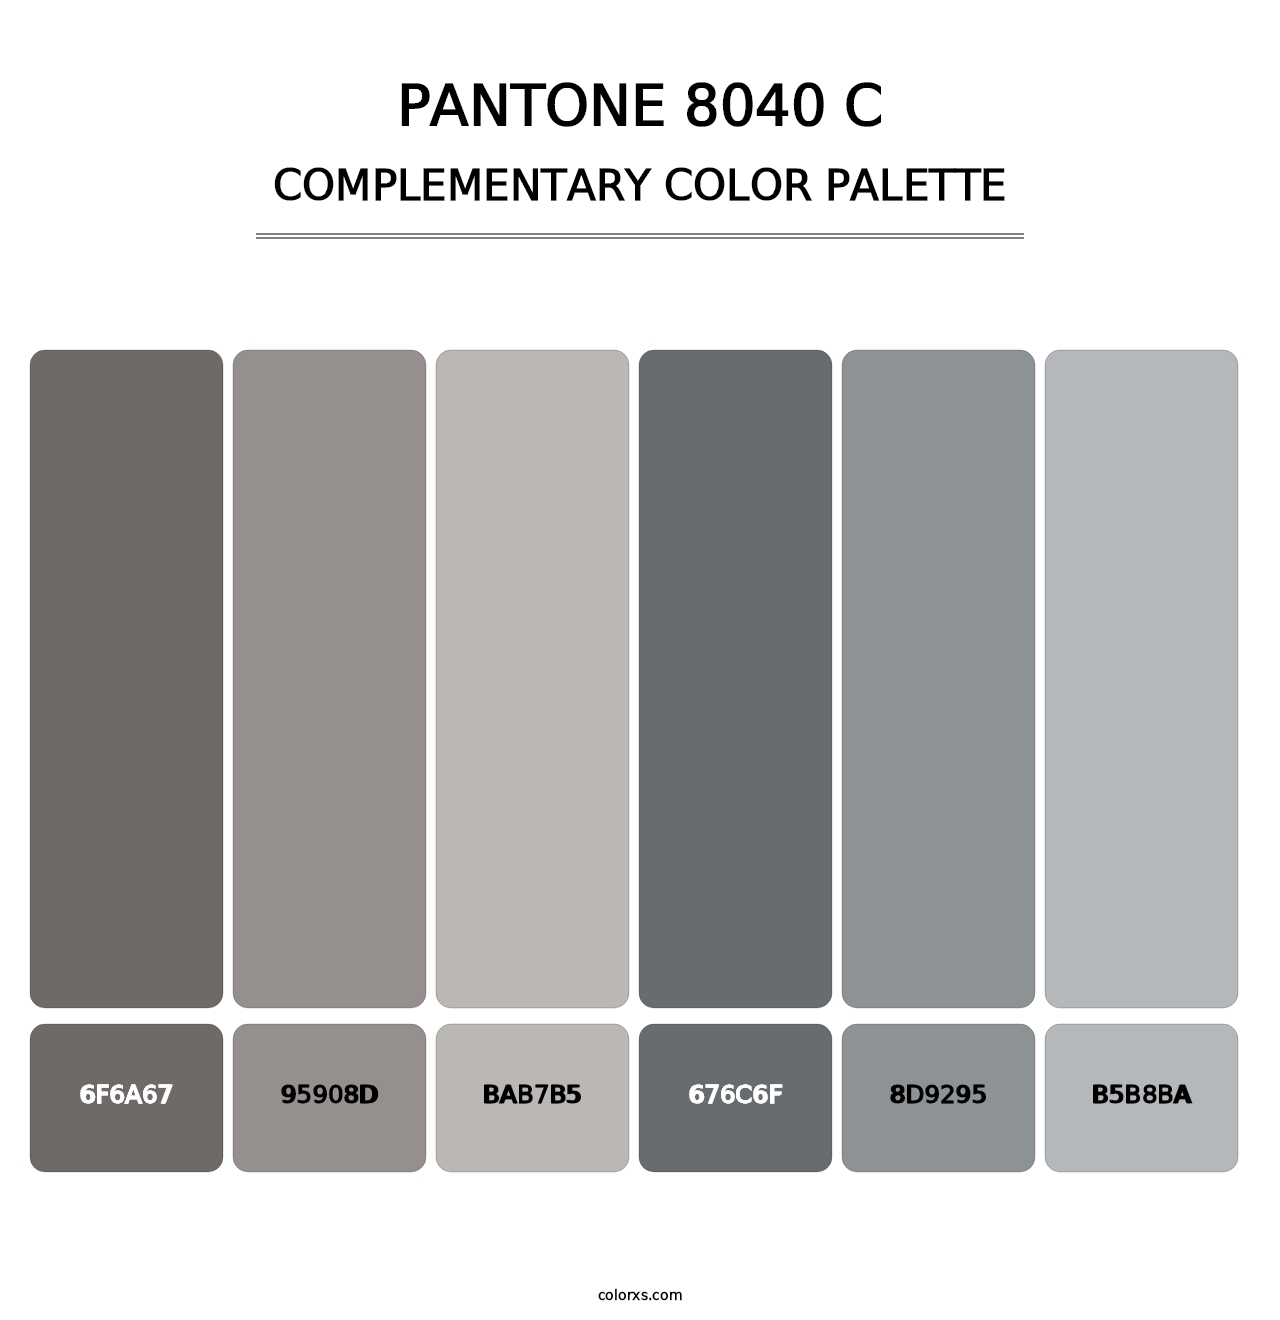 PANTONE 8040 C - Complementary Color Palette